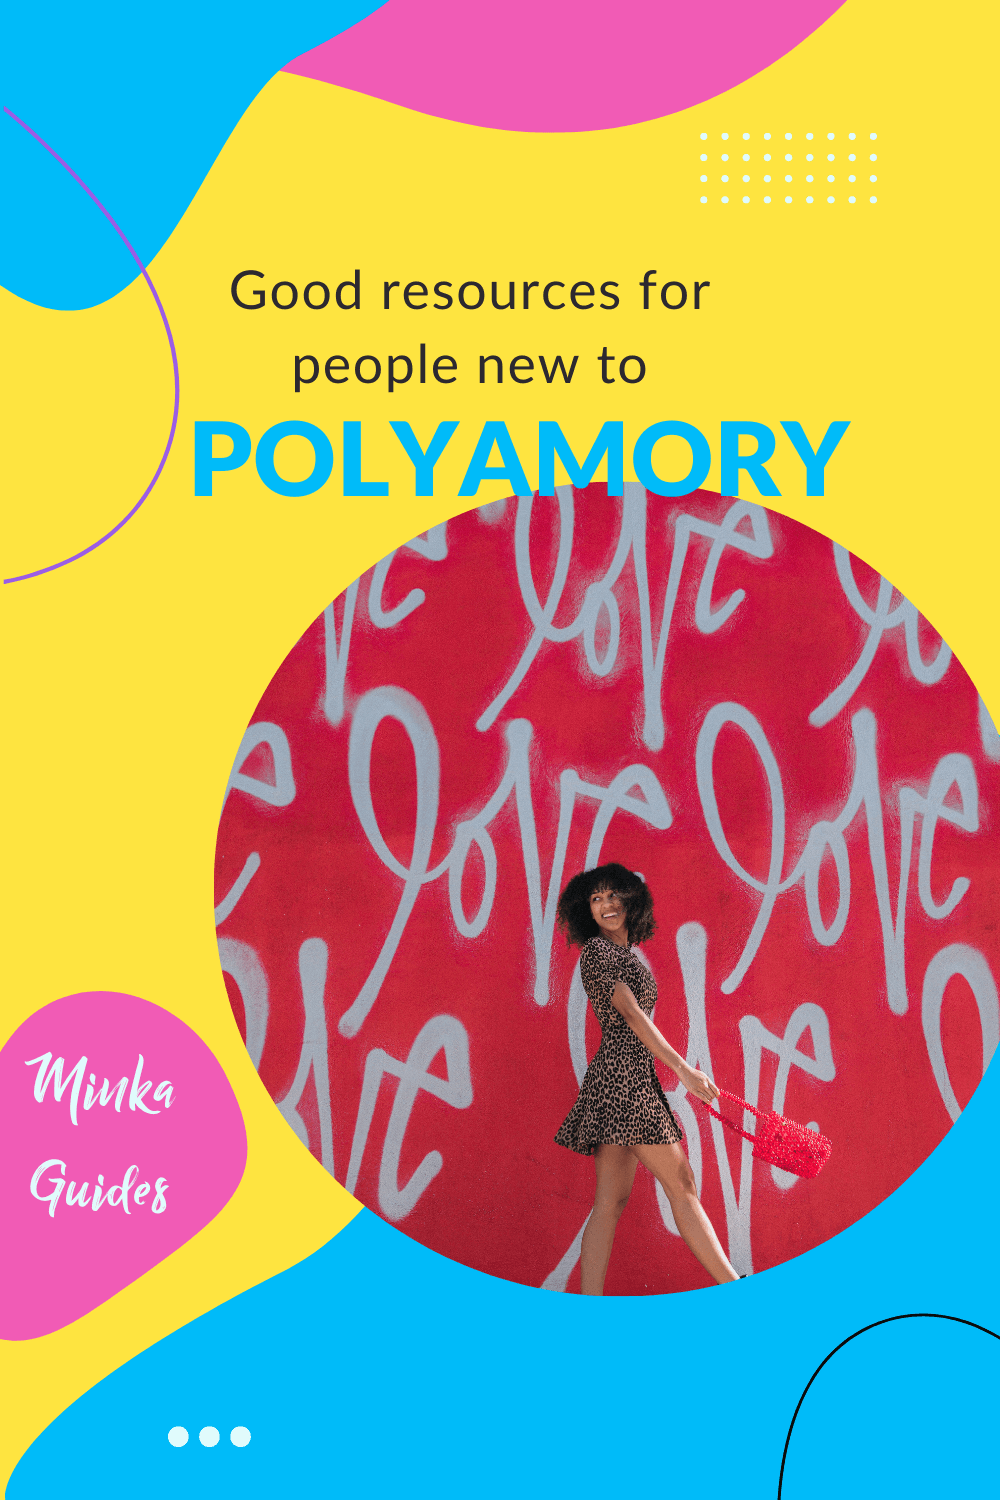 New to polyamory | Minka Guides